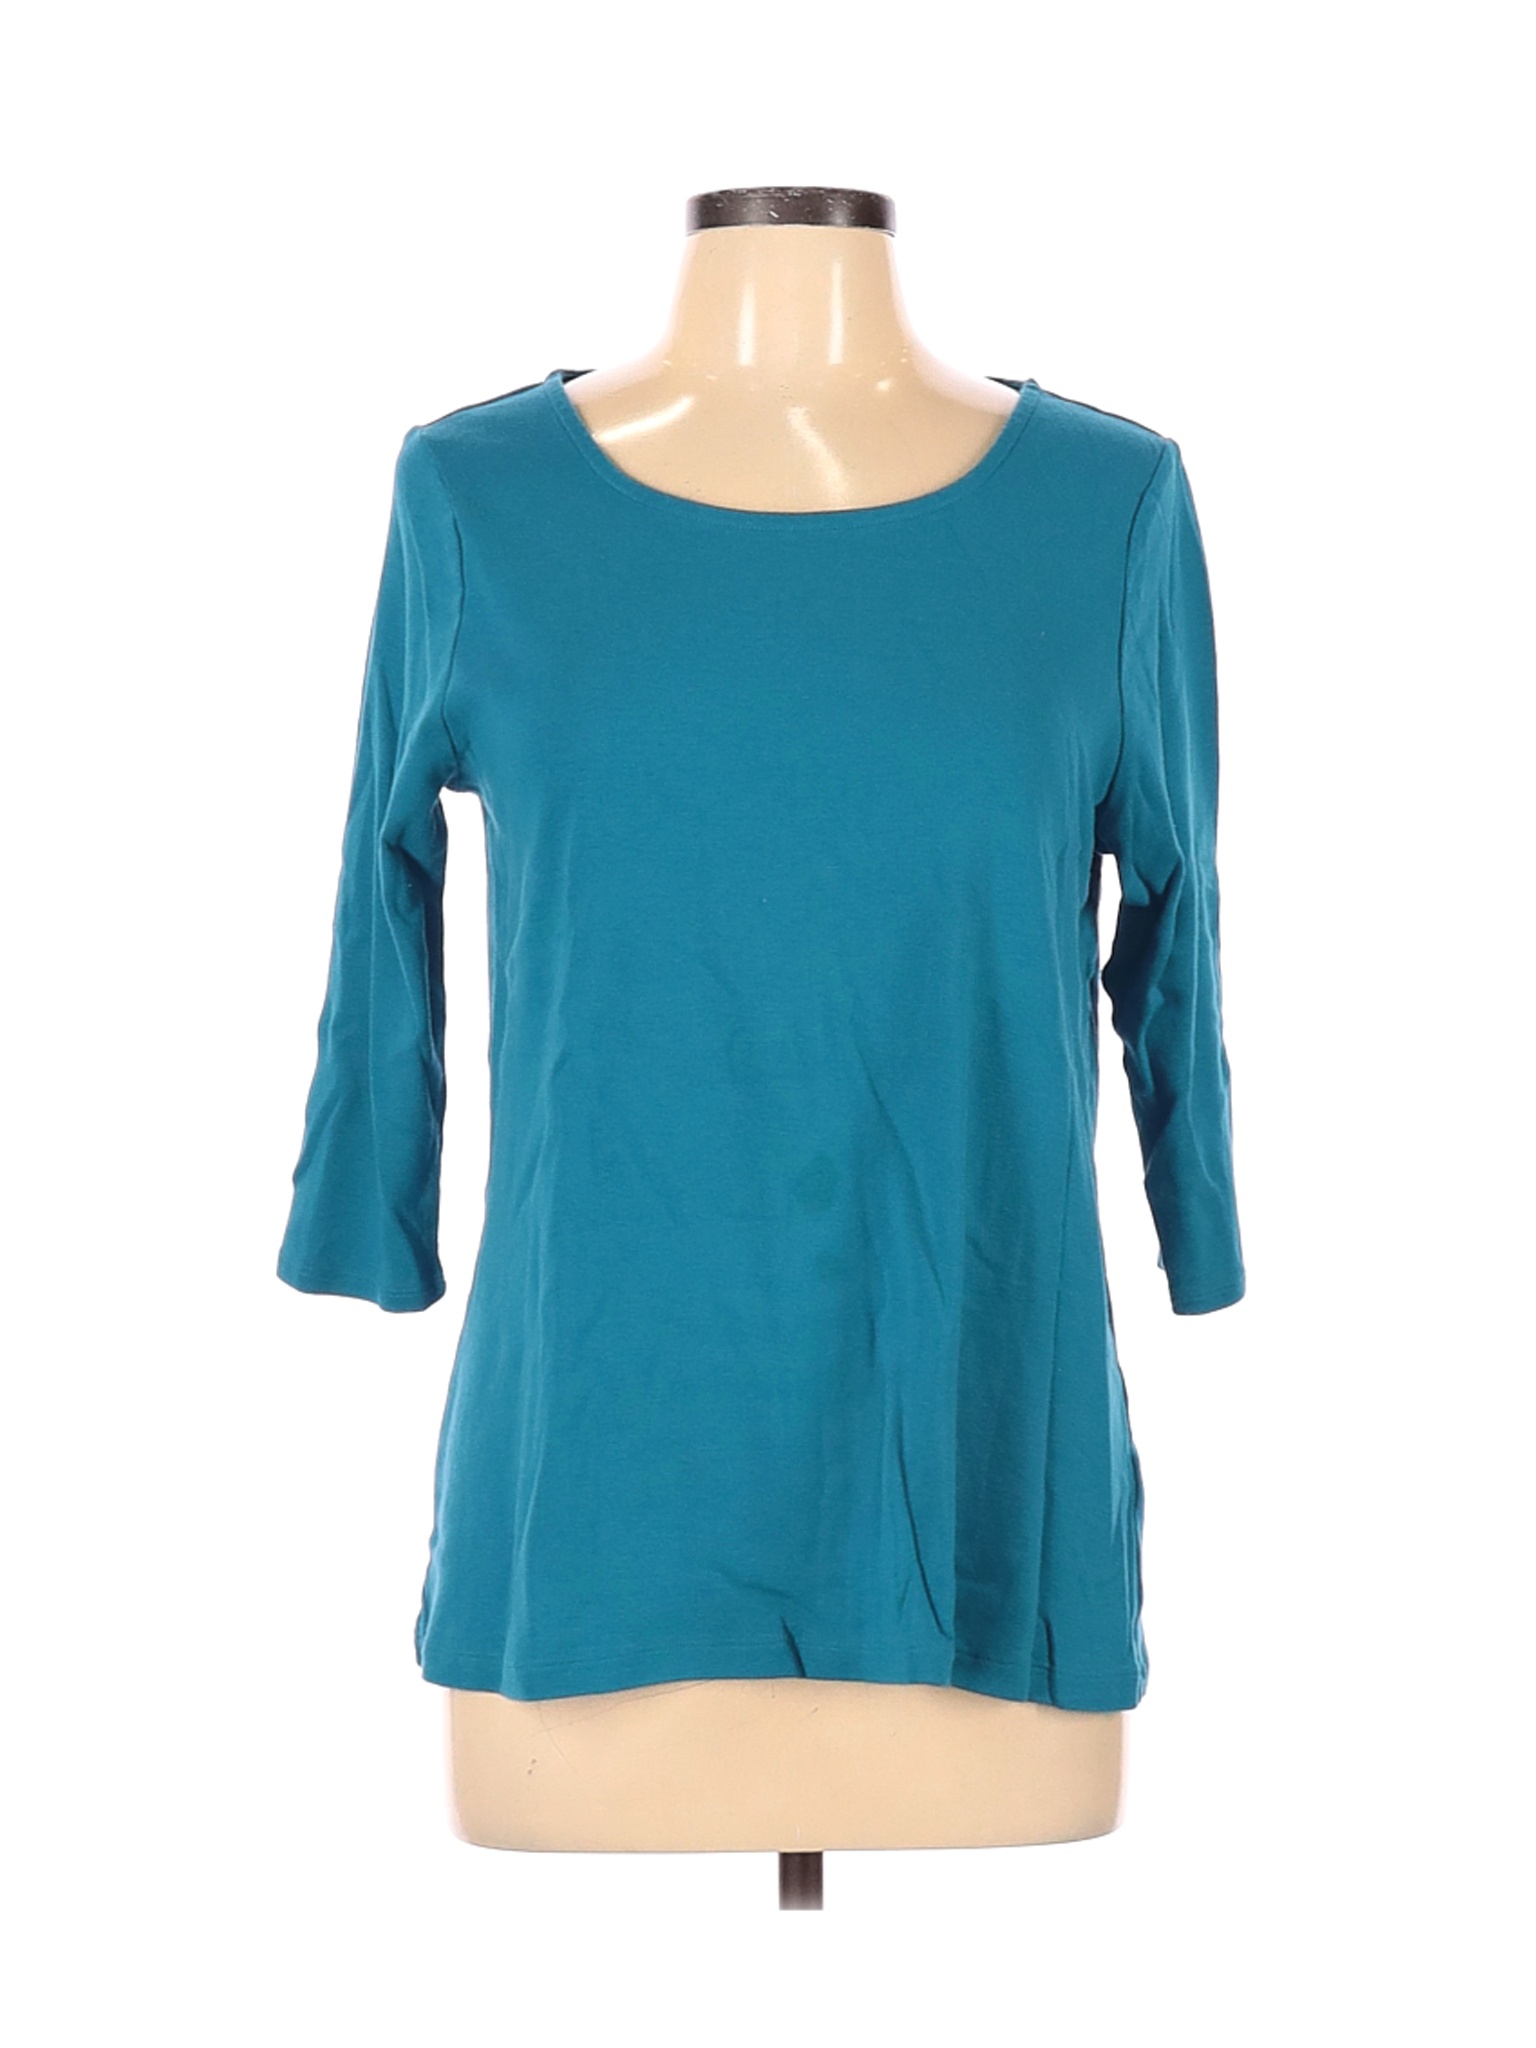 Sahalie Women Green Long Sleeve T-Shirt L | eBay